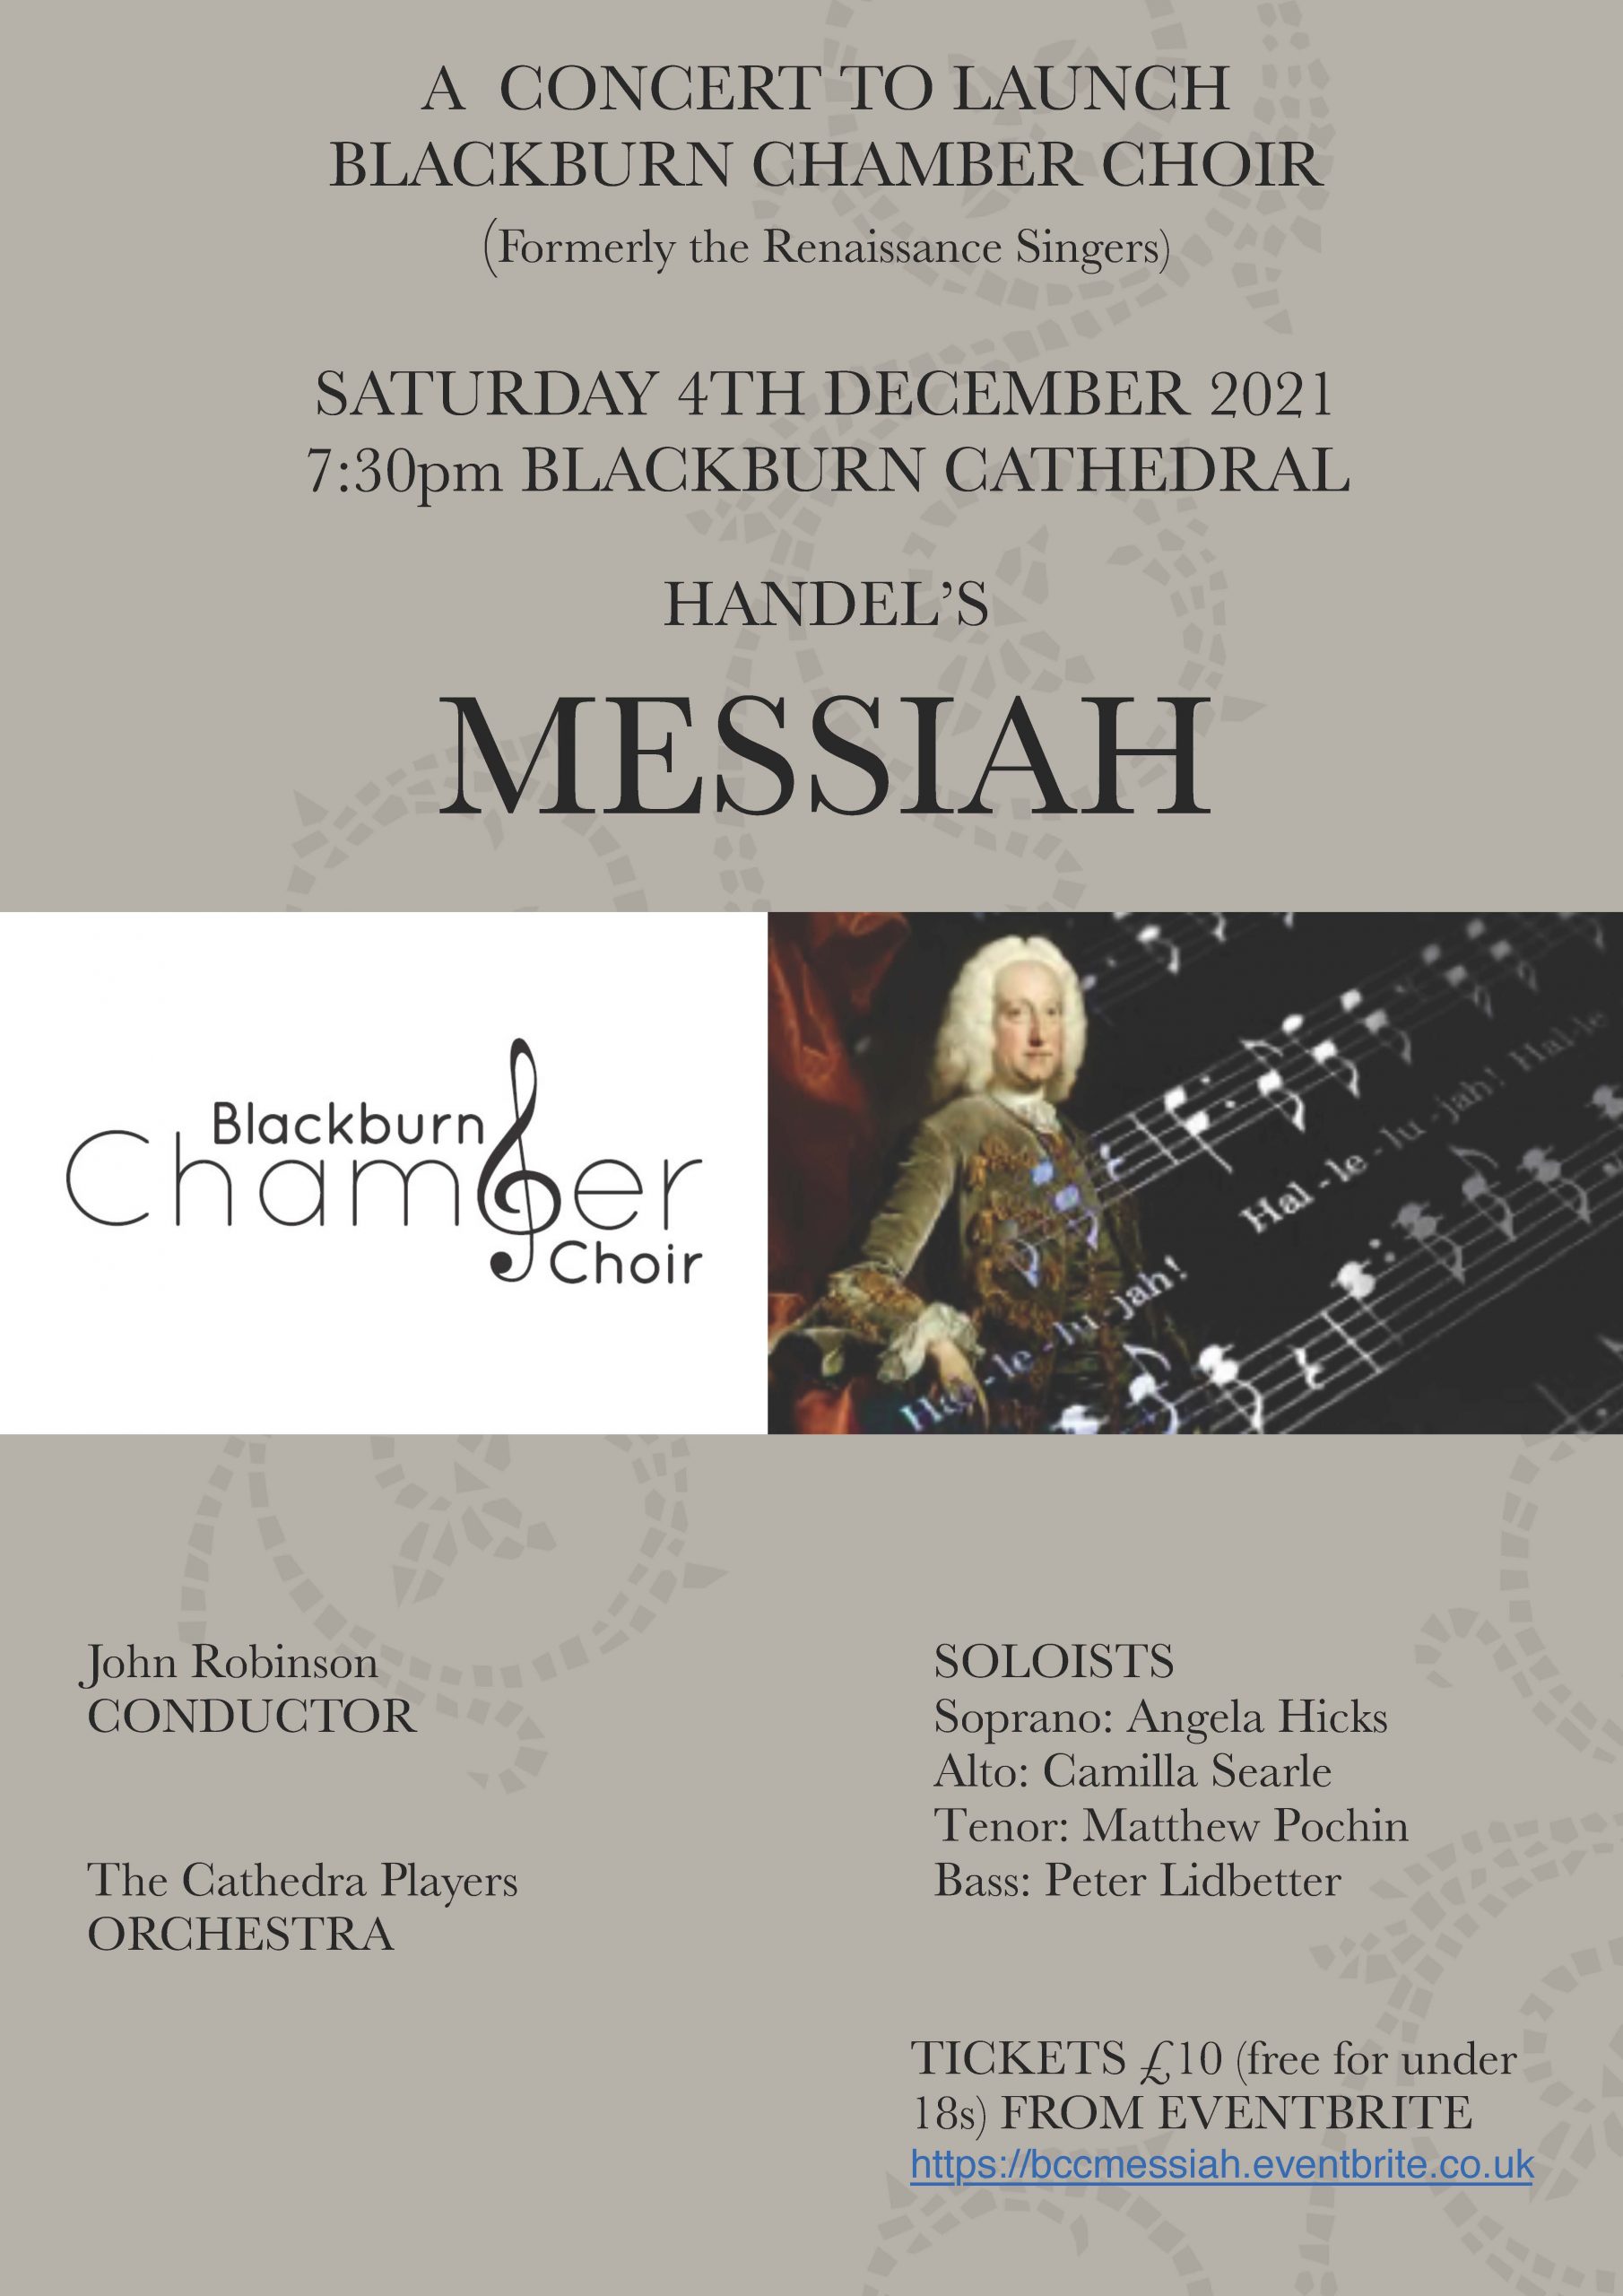 Details of Handel’s Messiah, a concert at Blackburn Cathedral